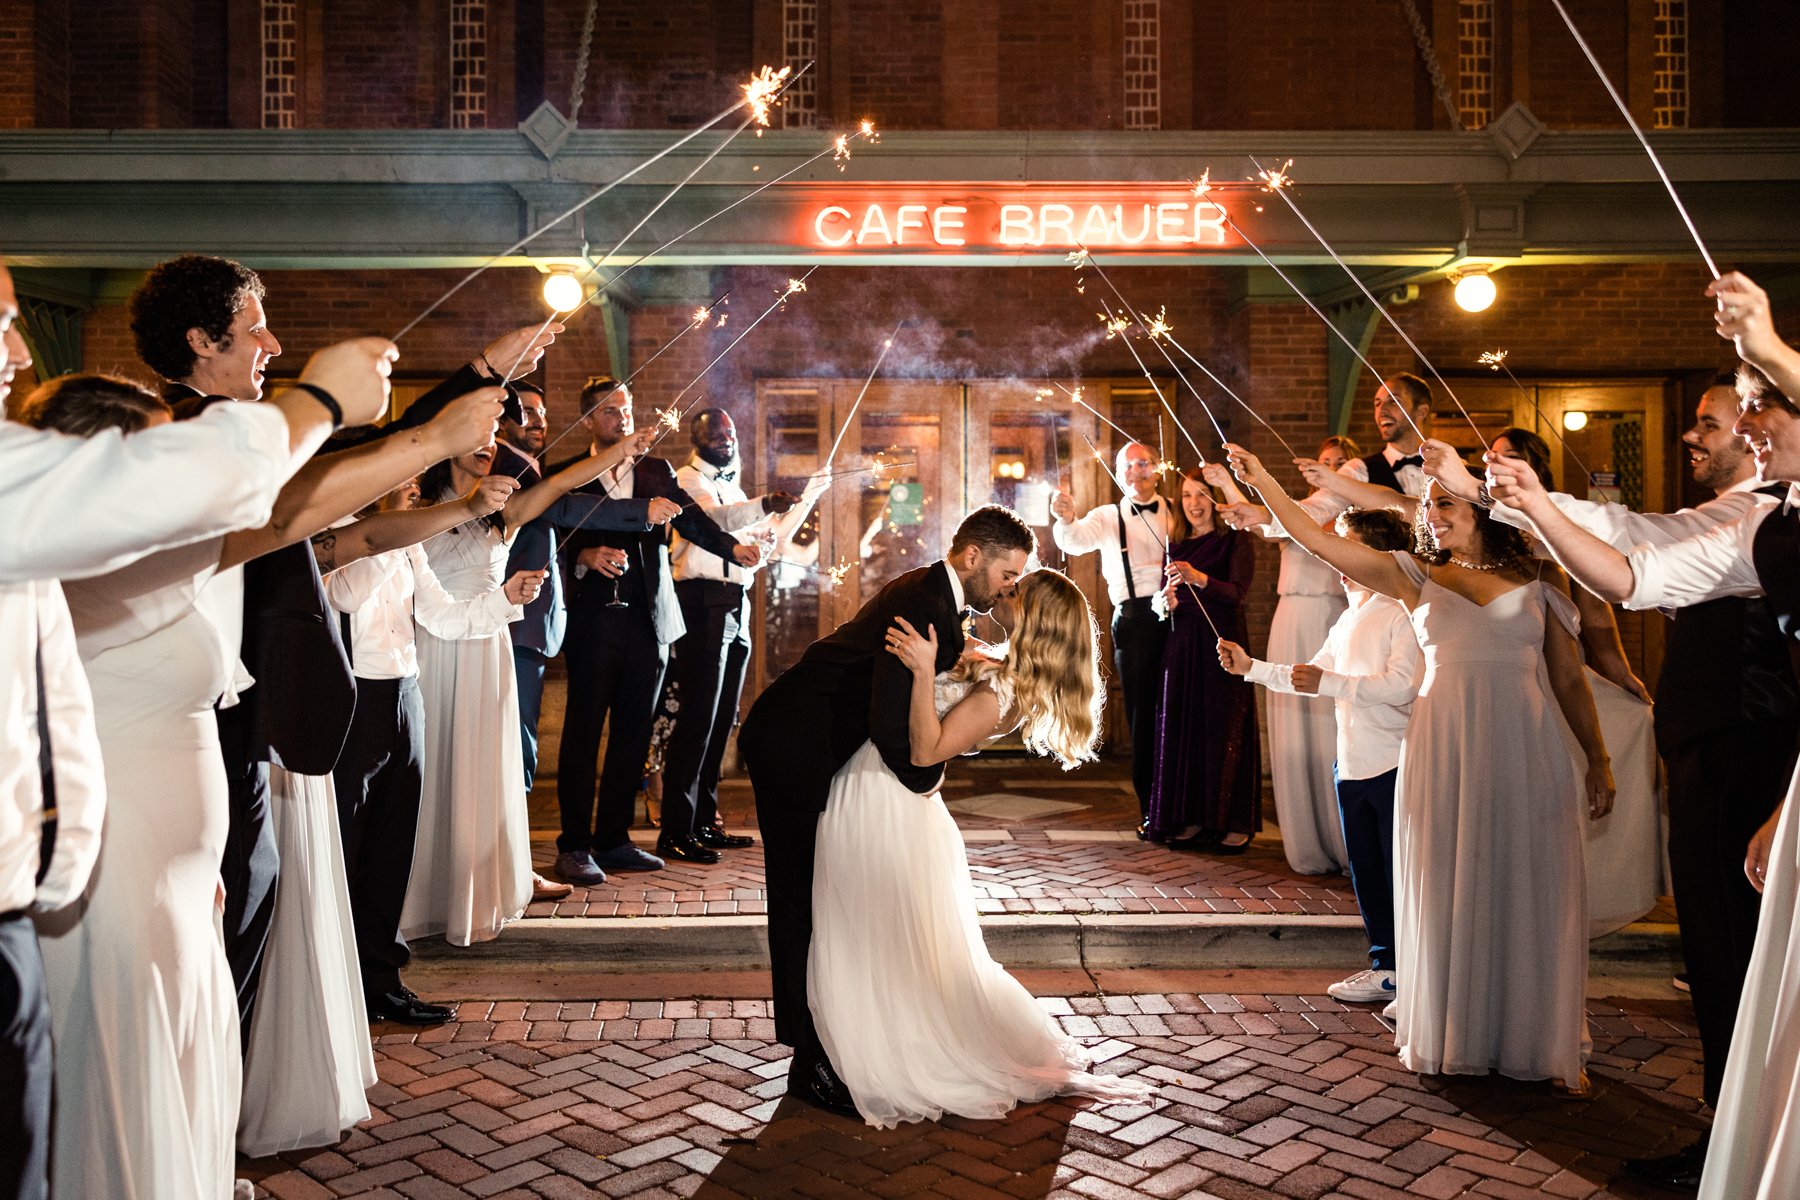 Cafe-Brauer-wedding-by-Emma-Mullins-Photography-130.jpg